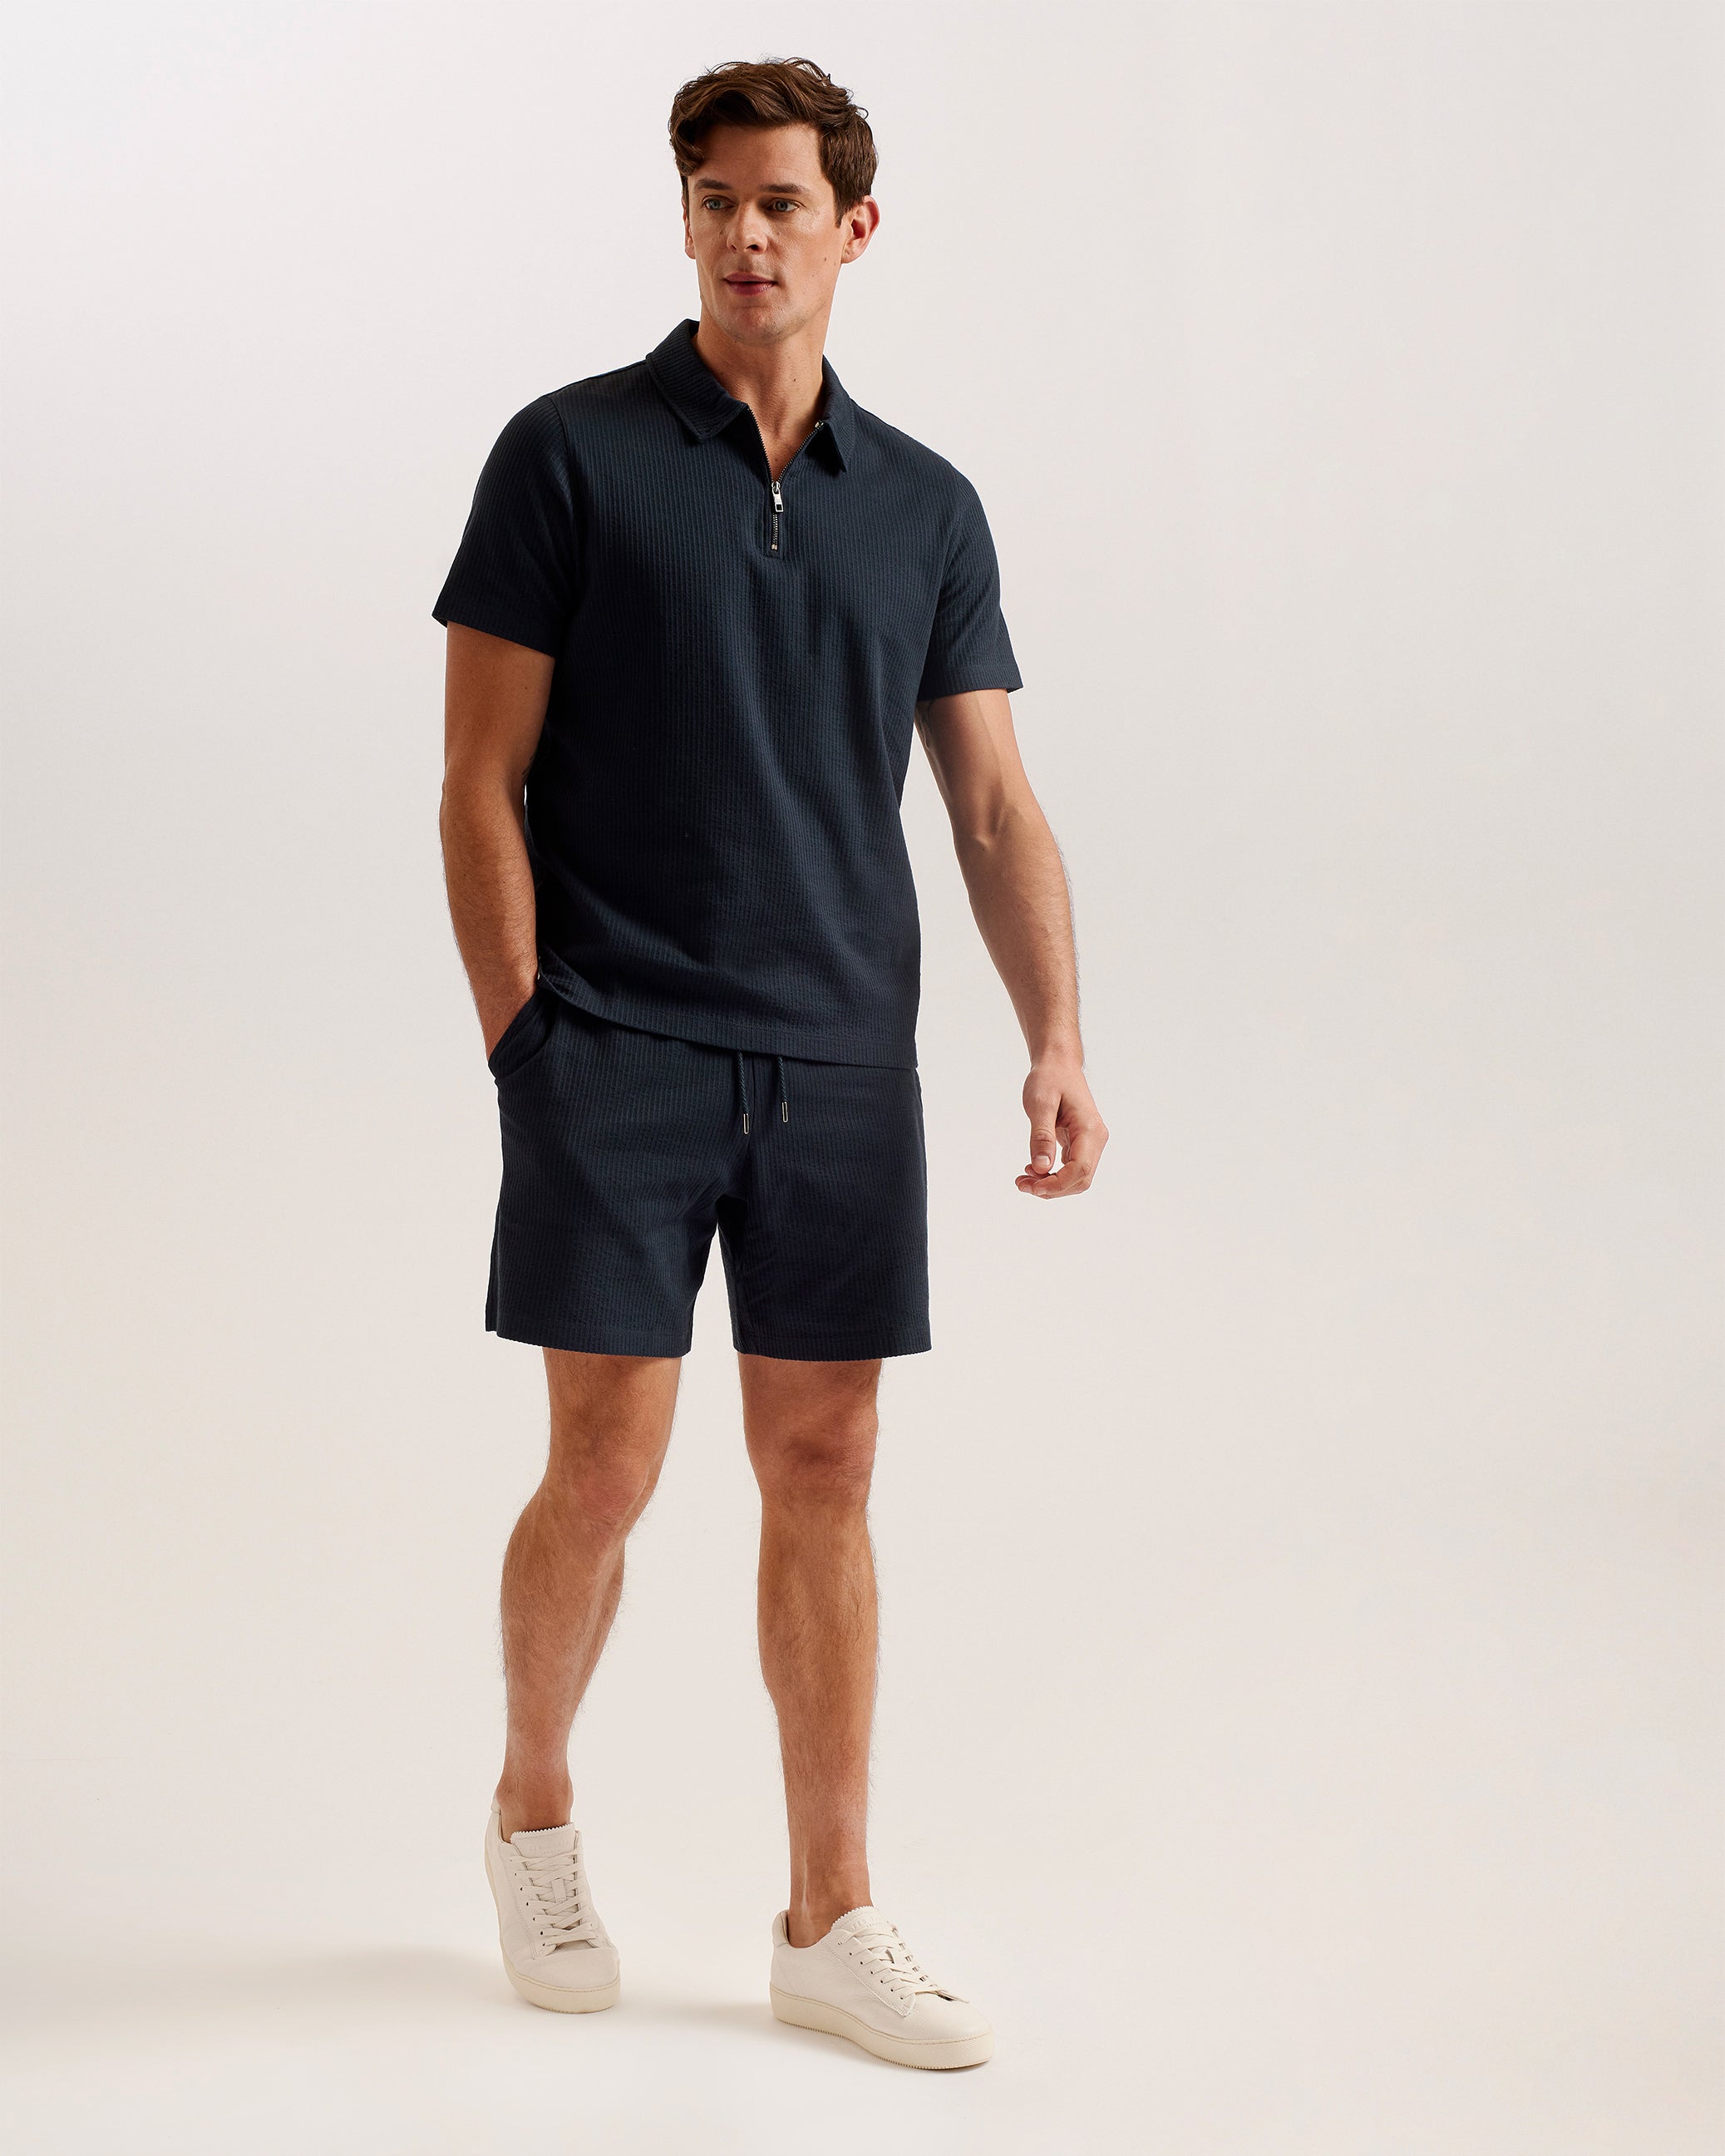 Airga Textured Jersey Shorts Navy